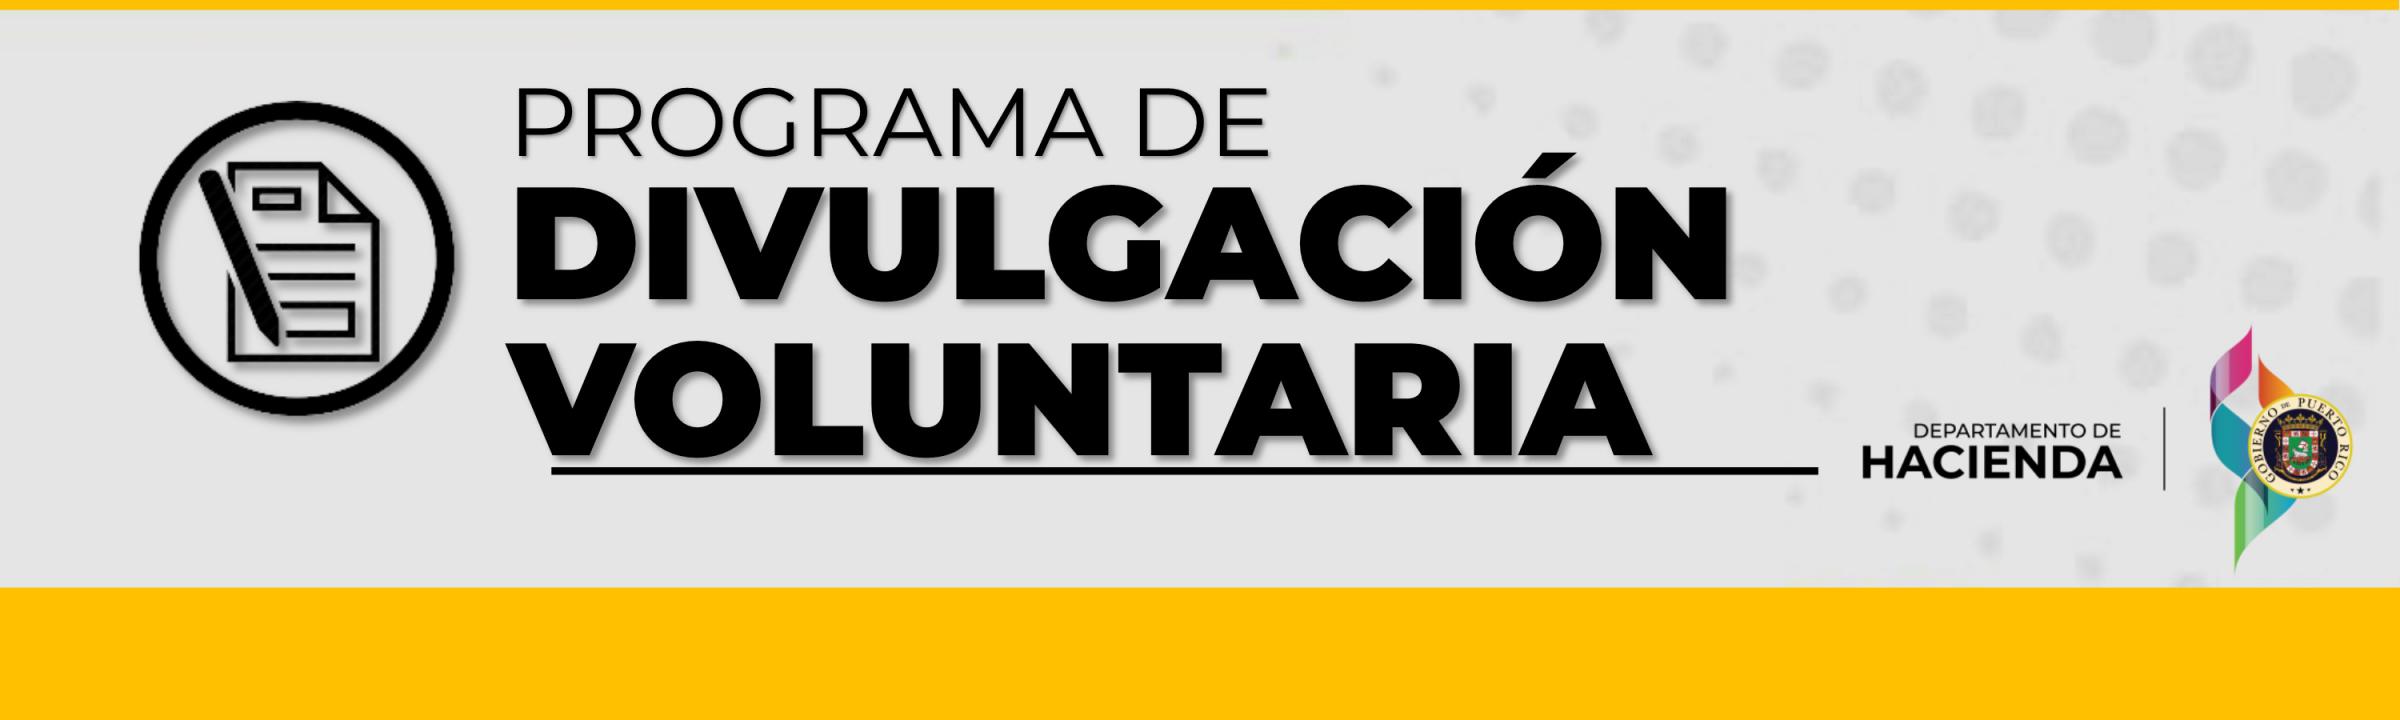 banner_divulgacion_voluntaria.pub_0.jpg